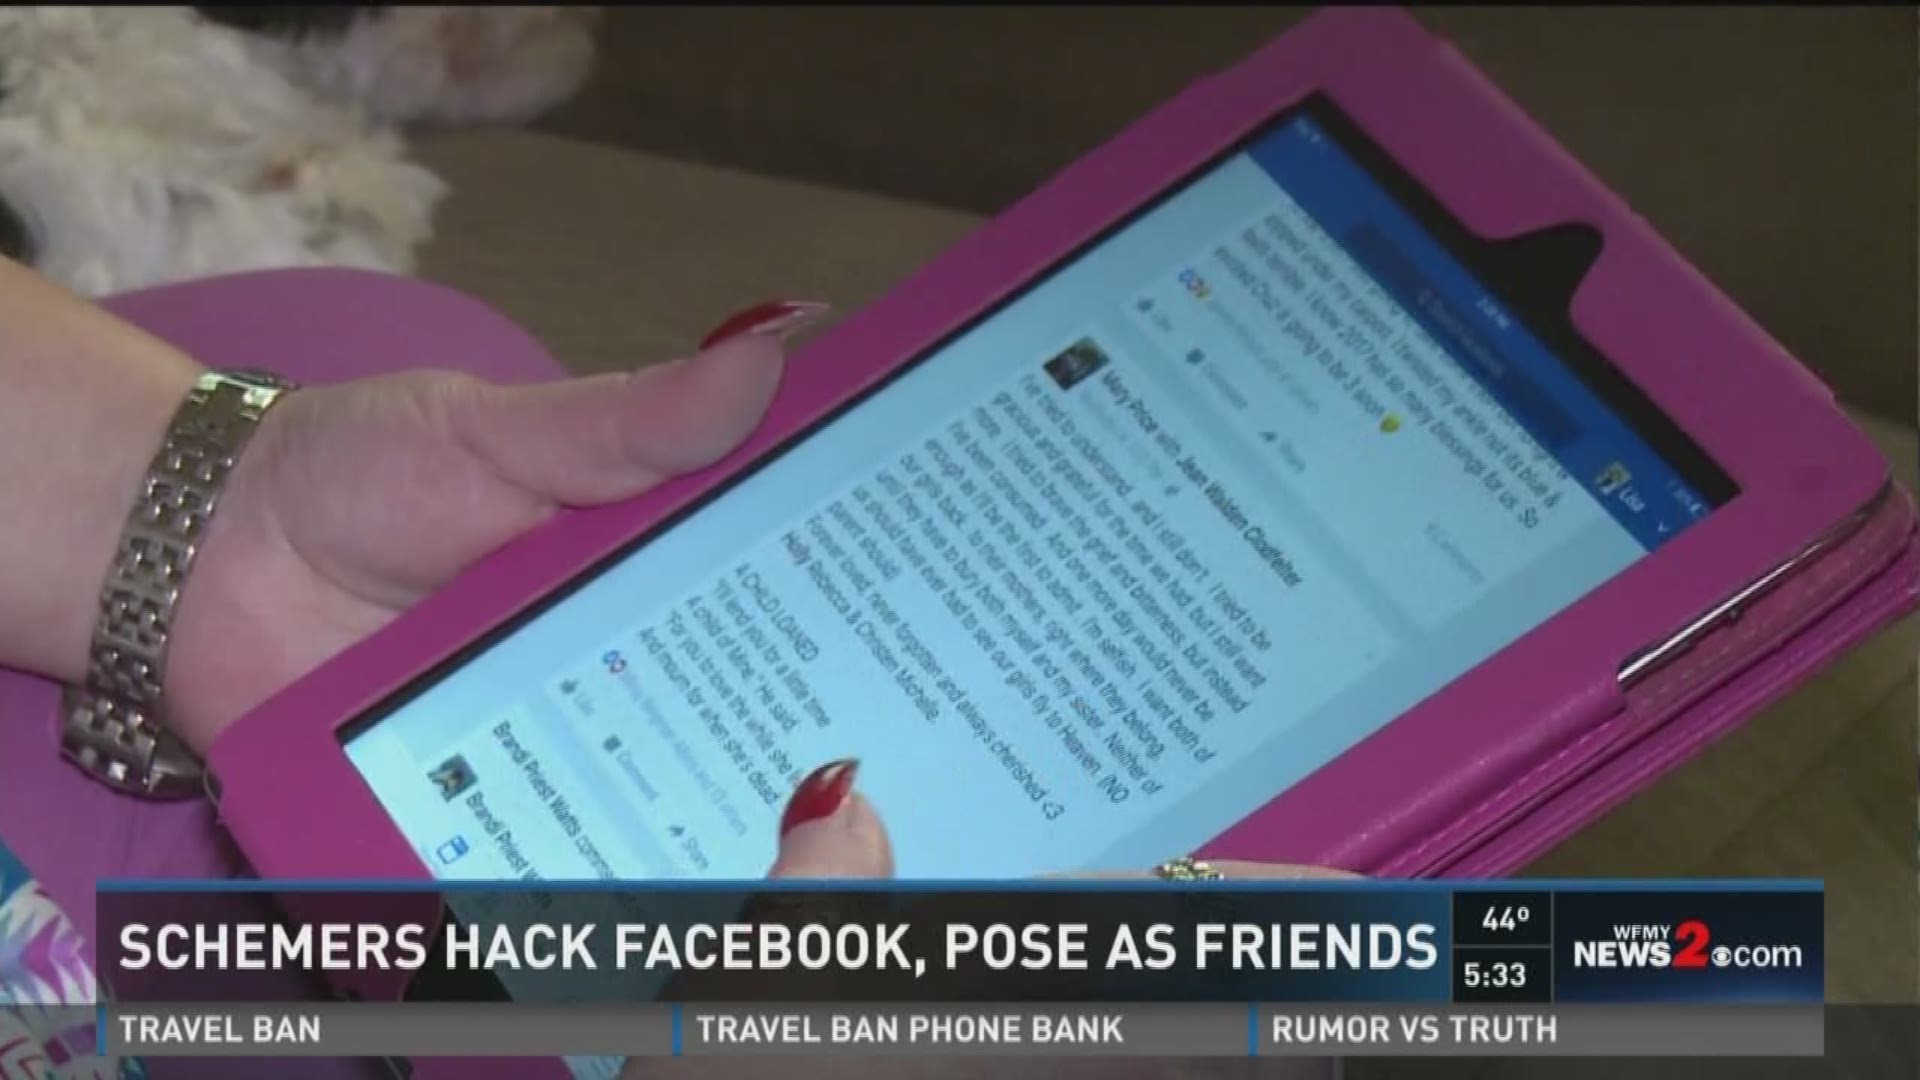 Schemers Hack Facebook, Pose As Friends